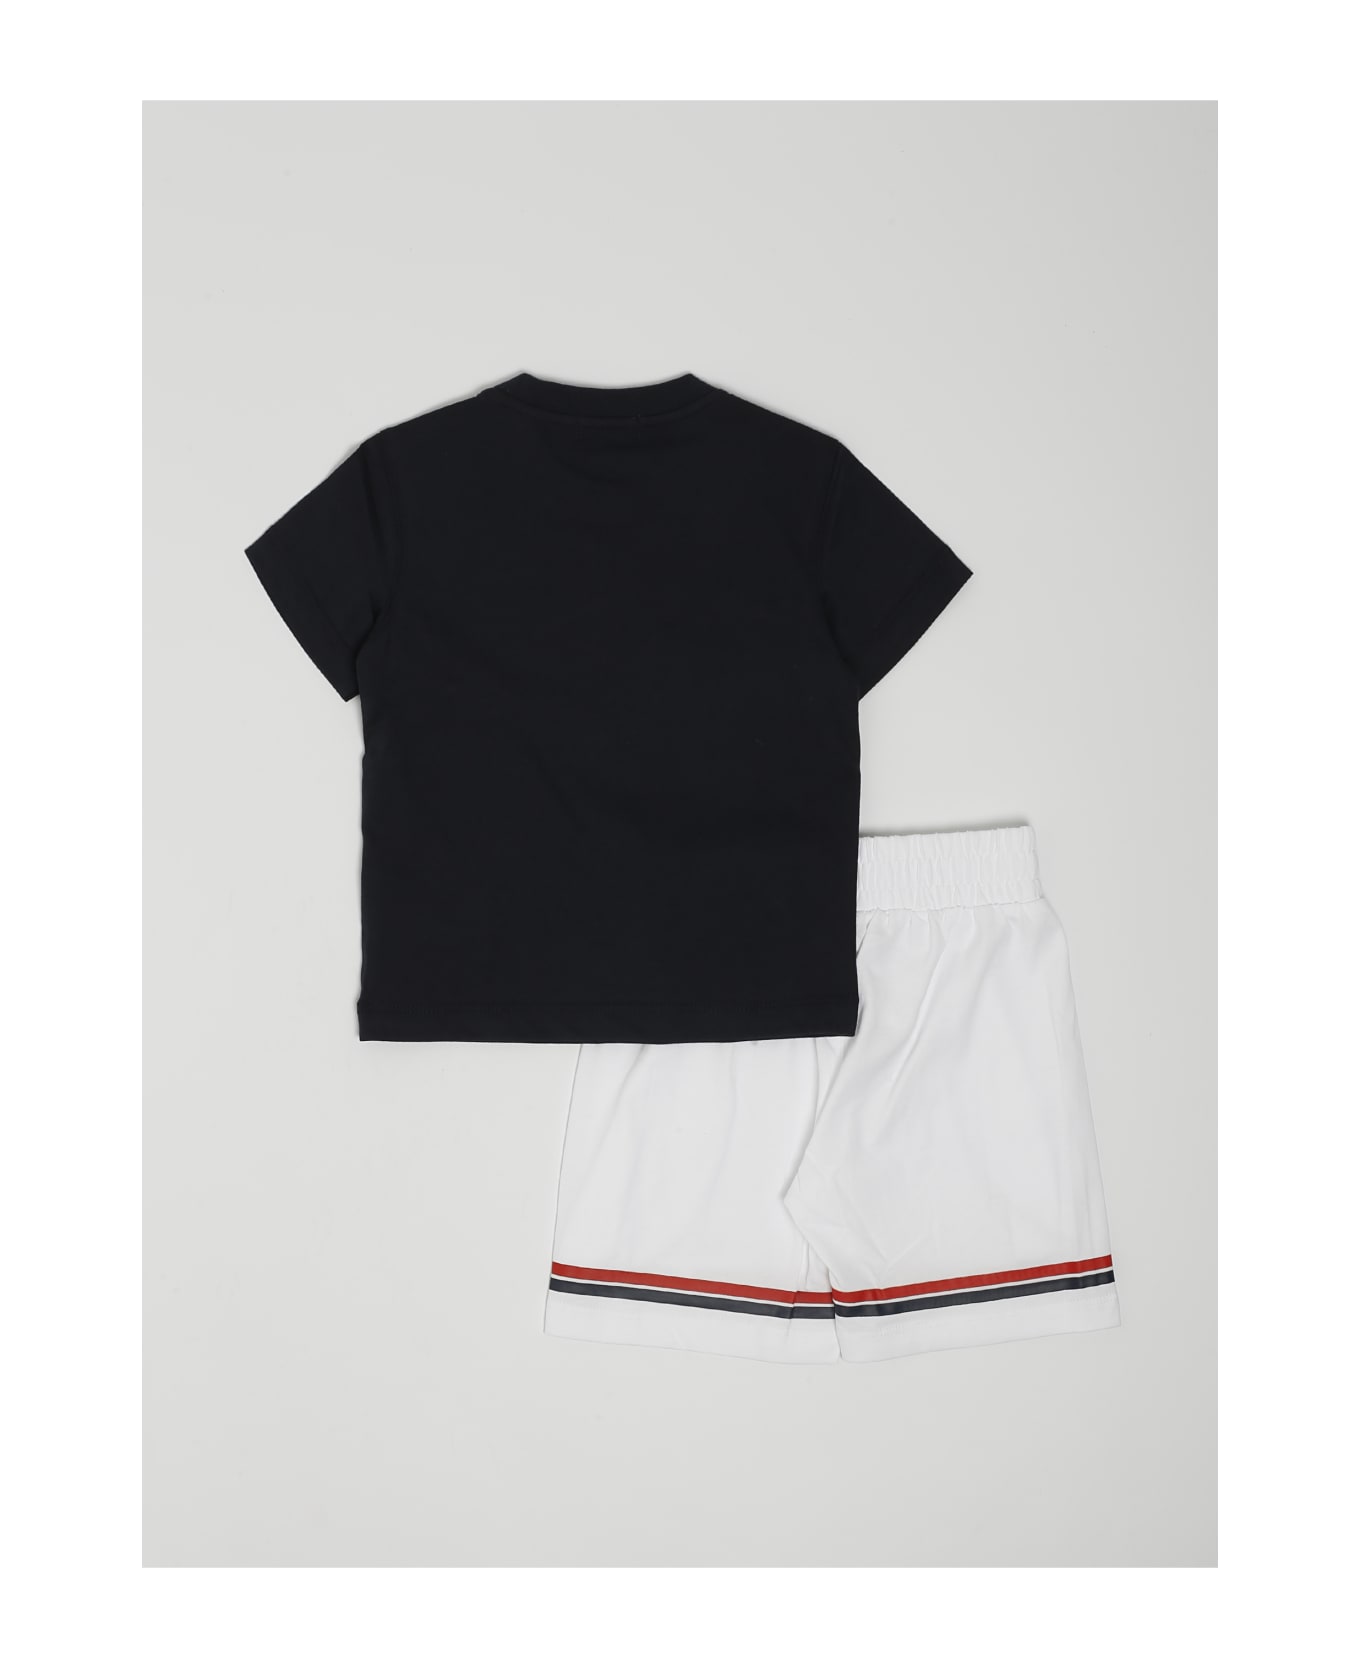 Jeckerson T-shirt+shorts Suit - BLU-BIANCO ジャンプスーツ